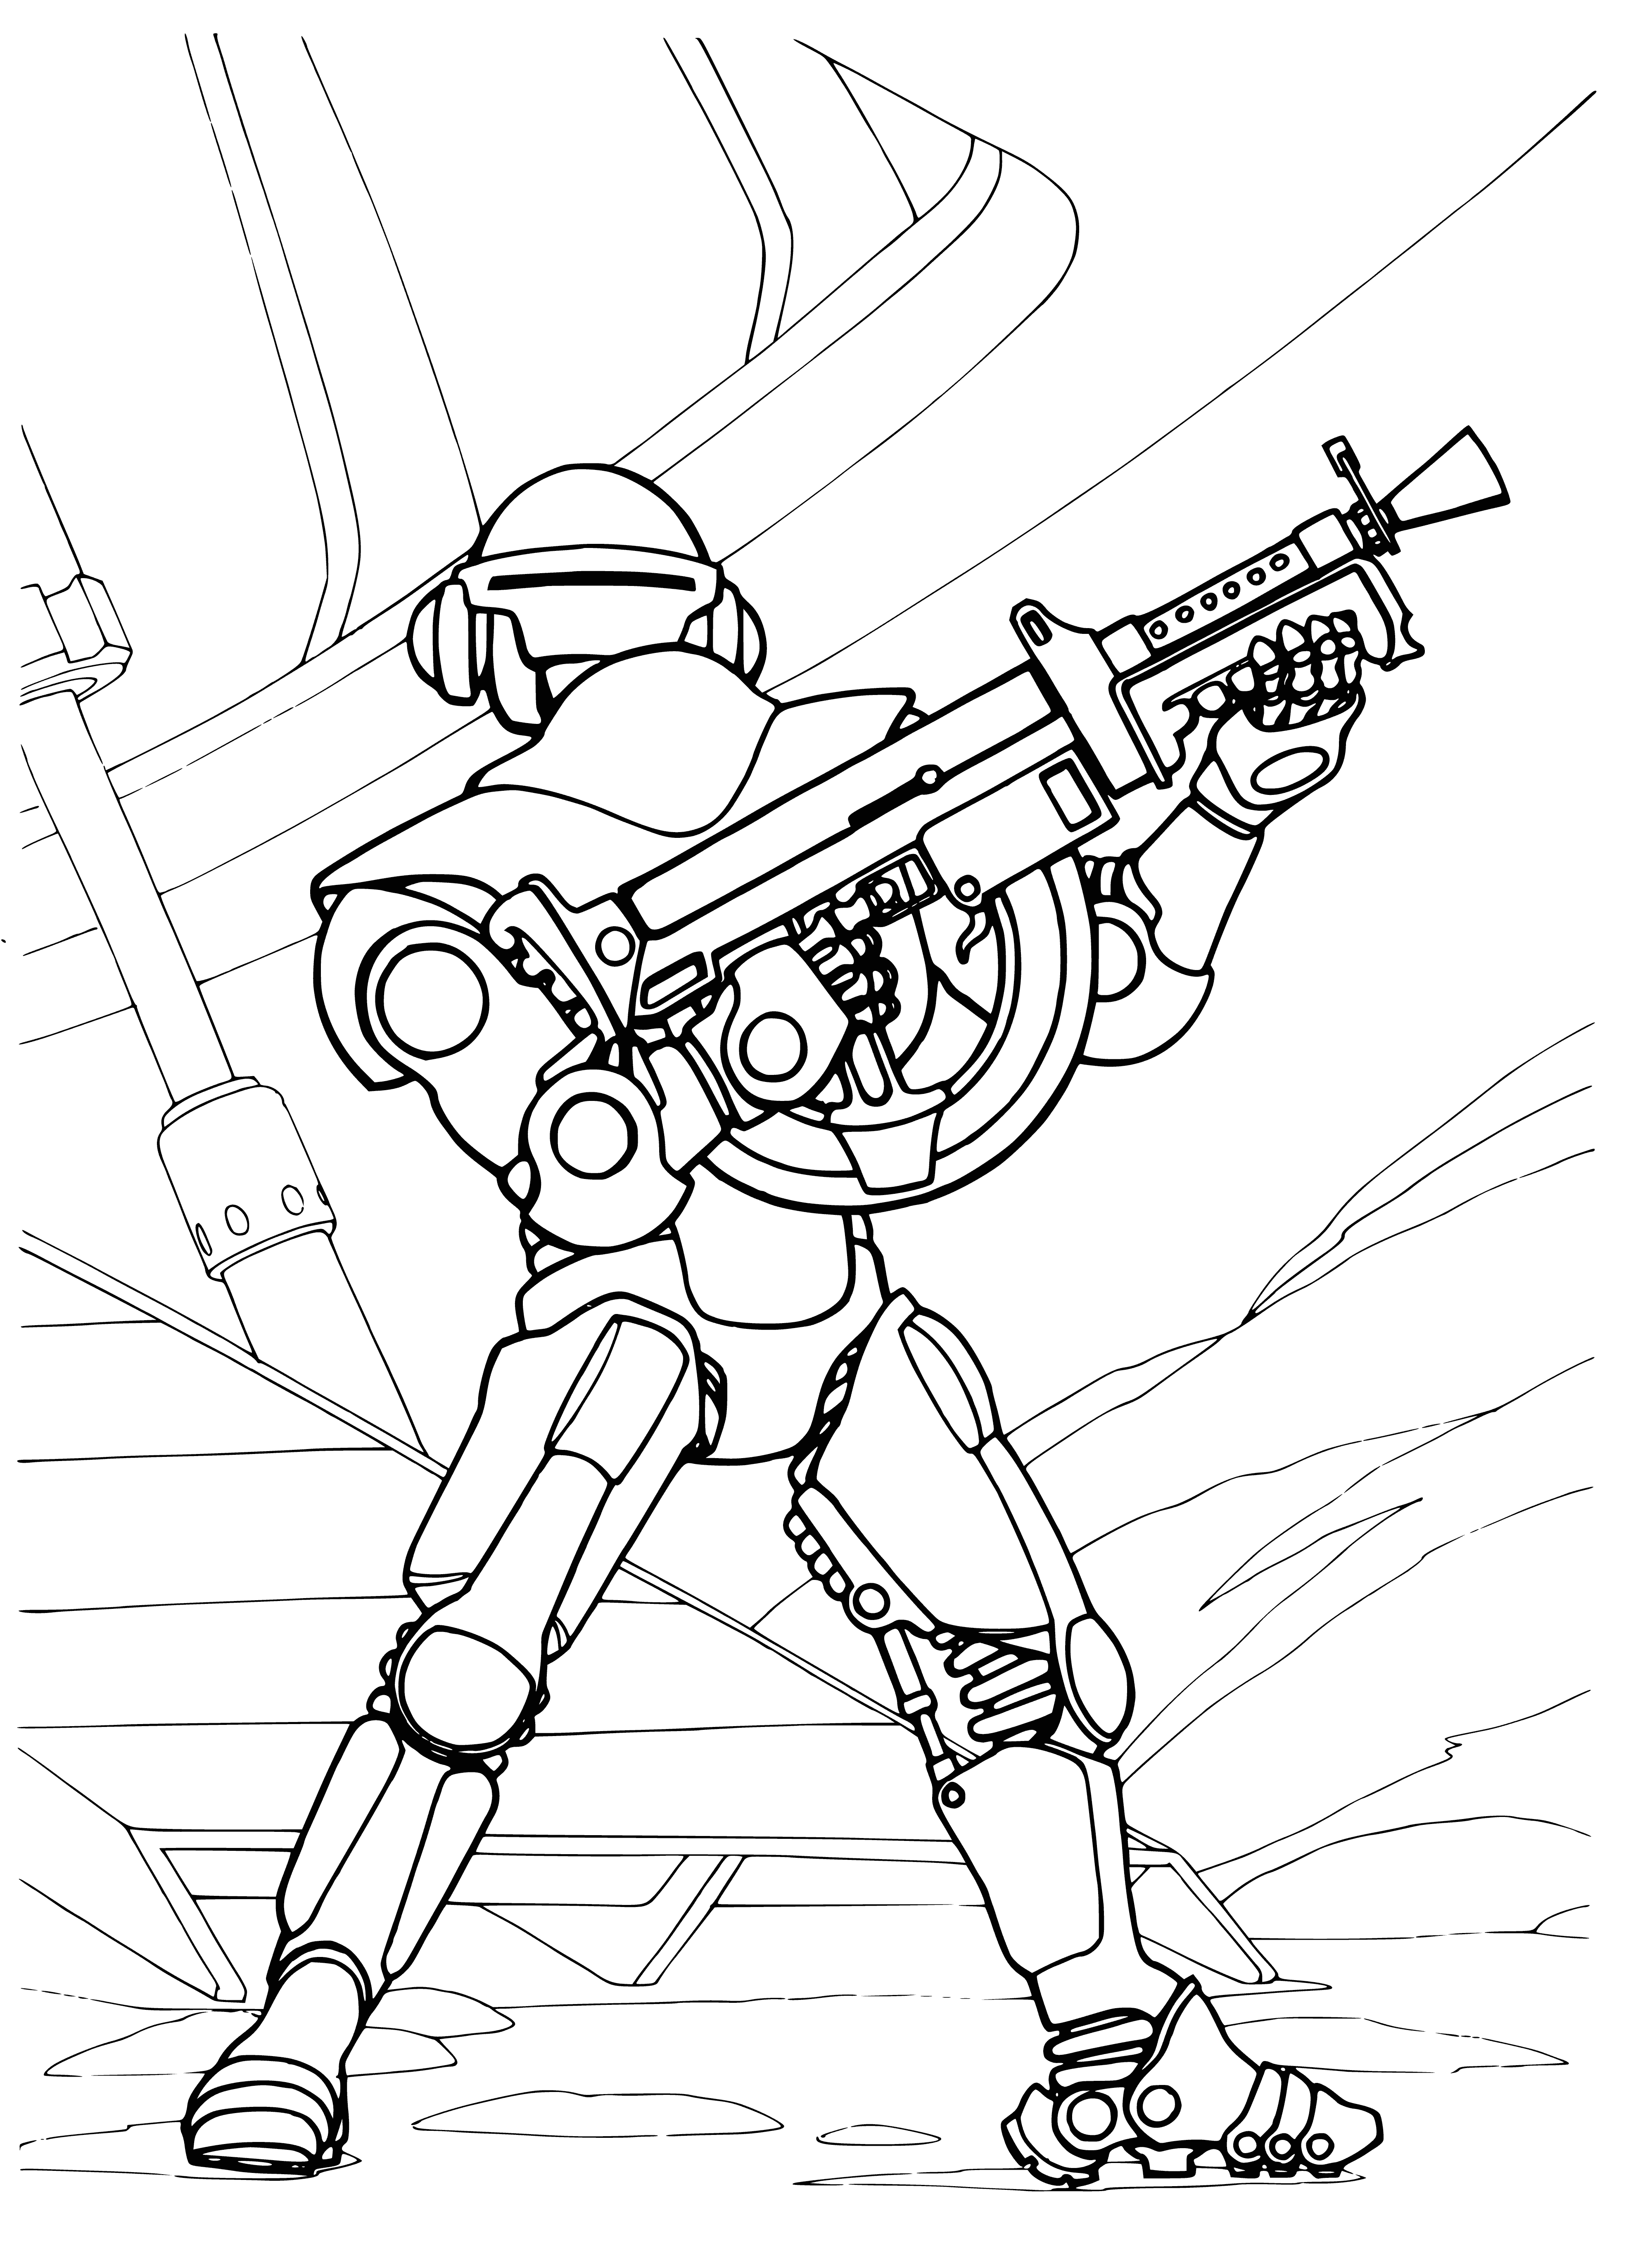 Infantryman coloring page